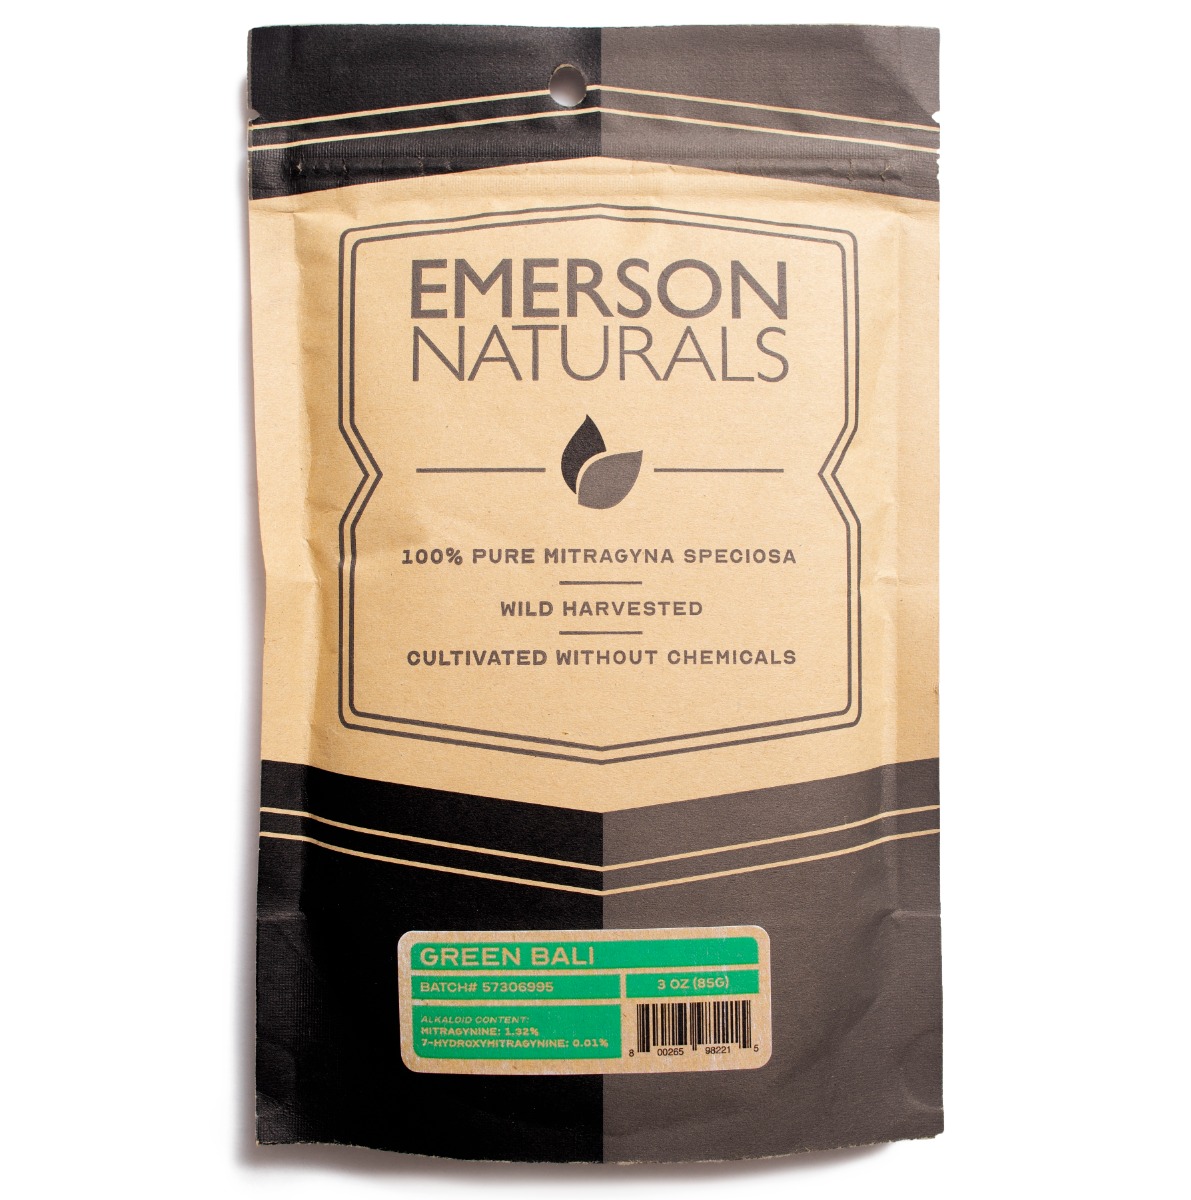 Green Bali Powder - 1/3/5oz - Emerson Naturals | Apotheca.org KRATOM FREE SHIPPING!*